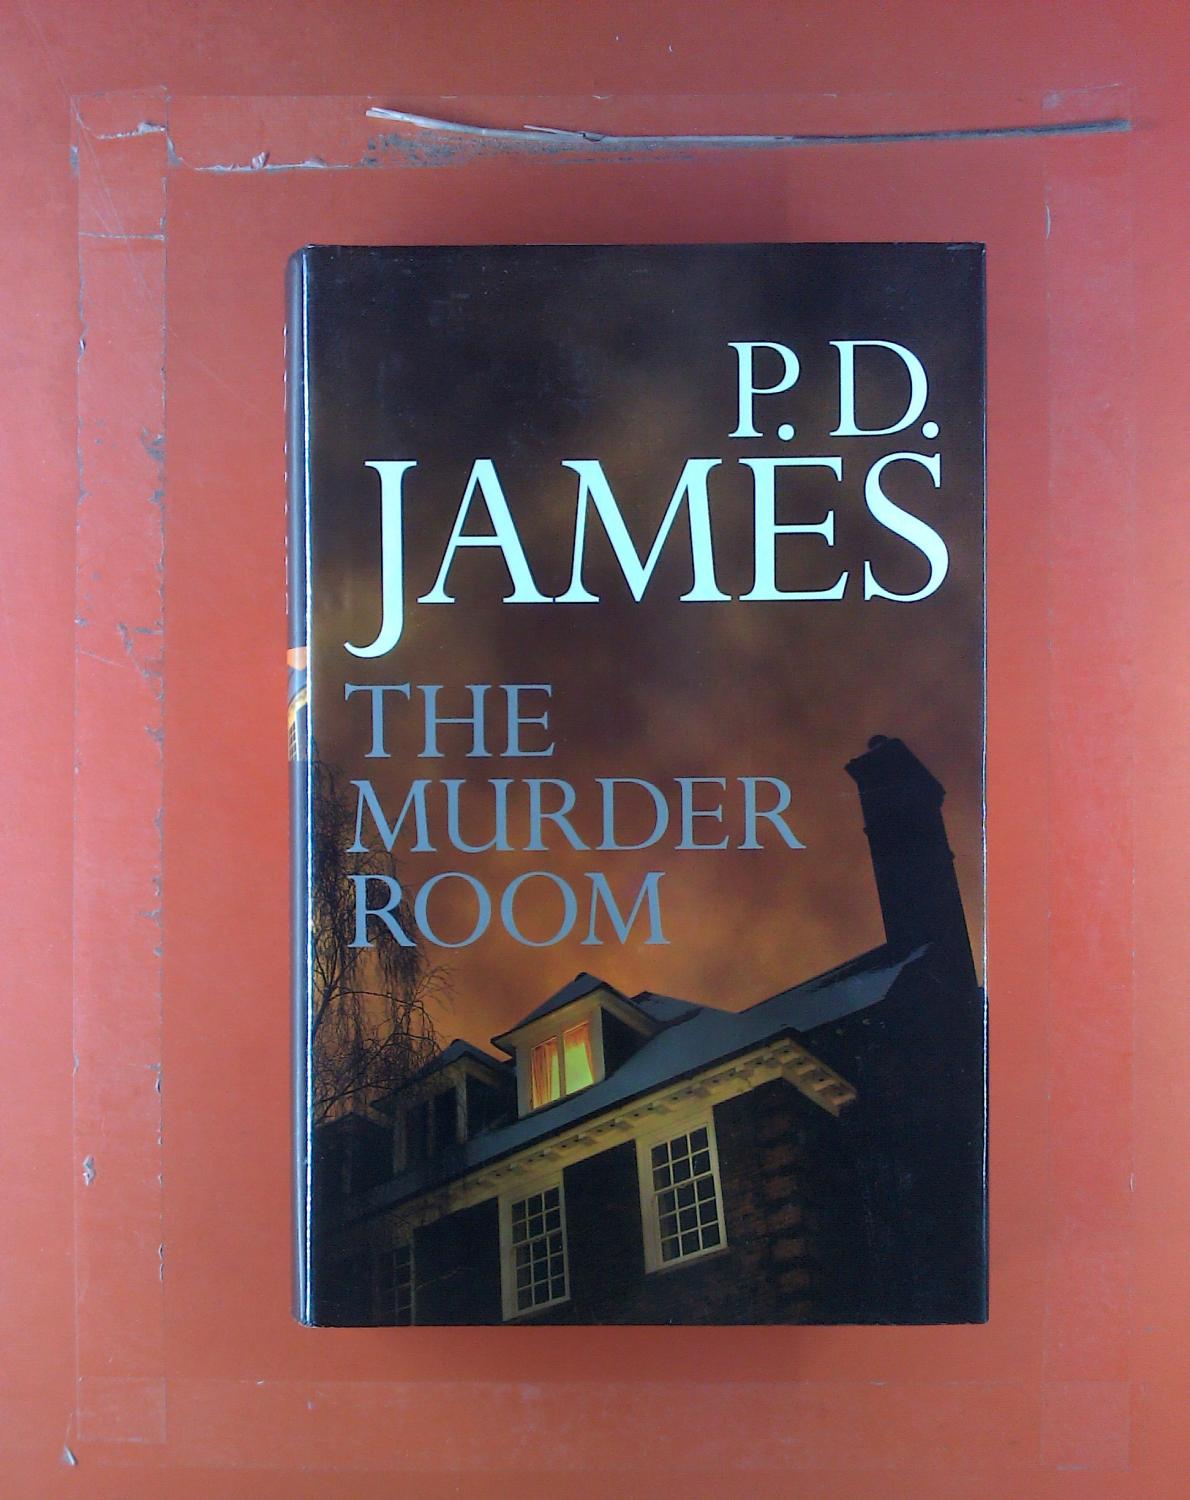 The Murder Room - P. D. James